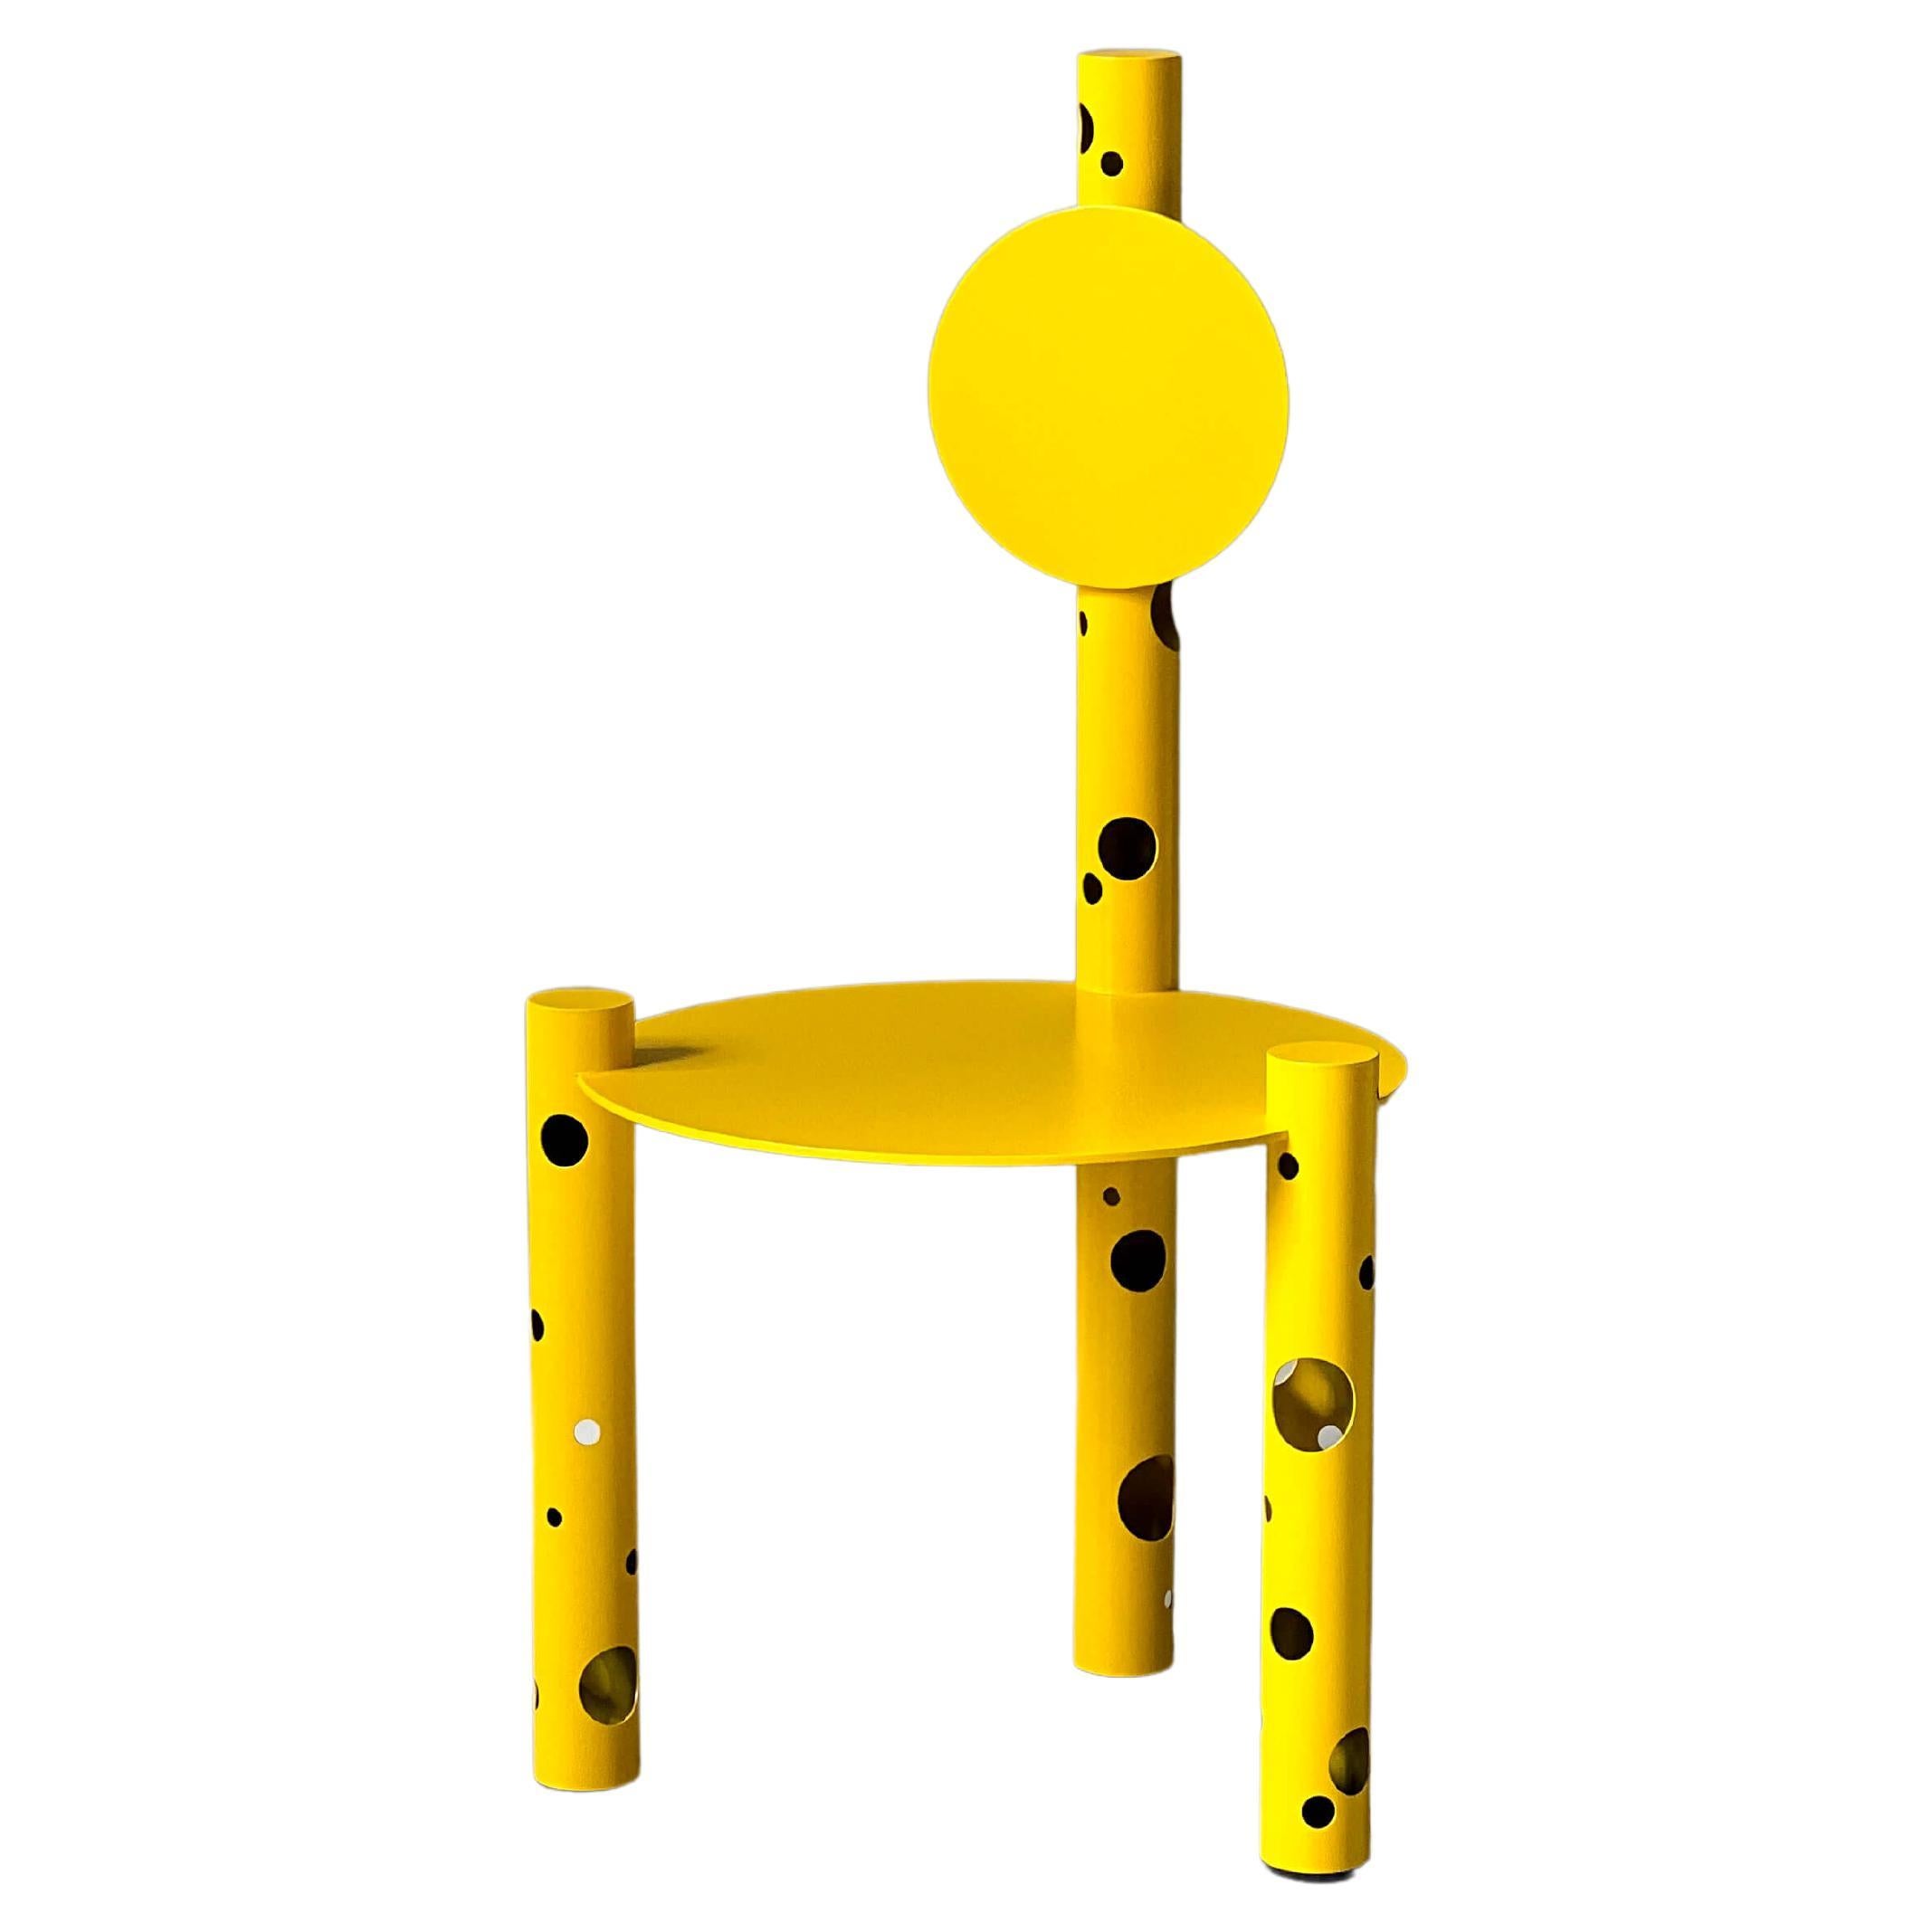 Spinzi SIlös Chair, Collectible Italian Design, Bright Yellow Sculptural Seating